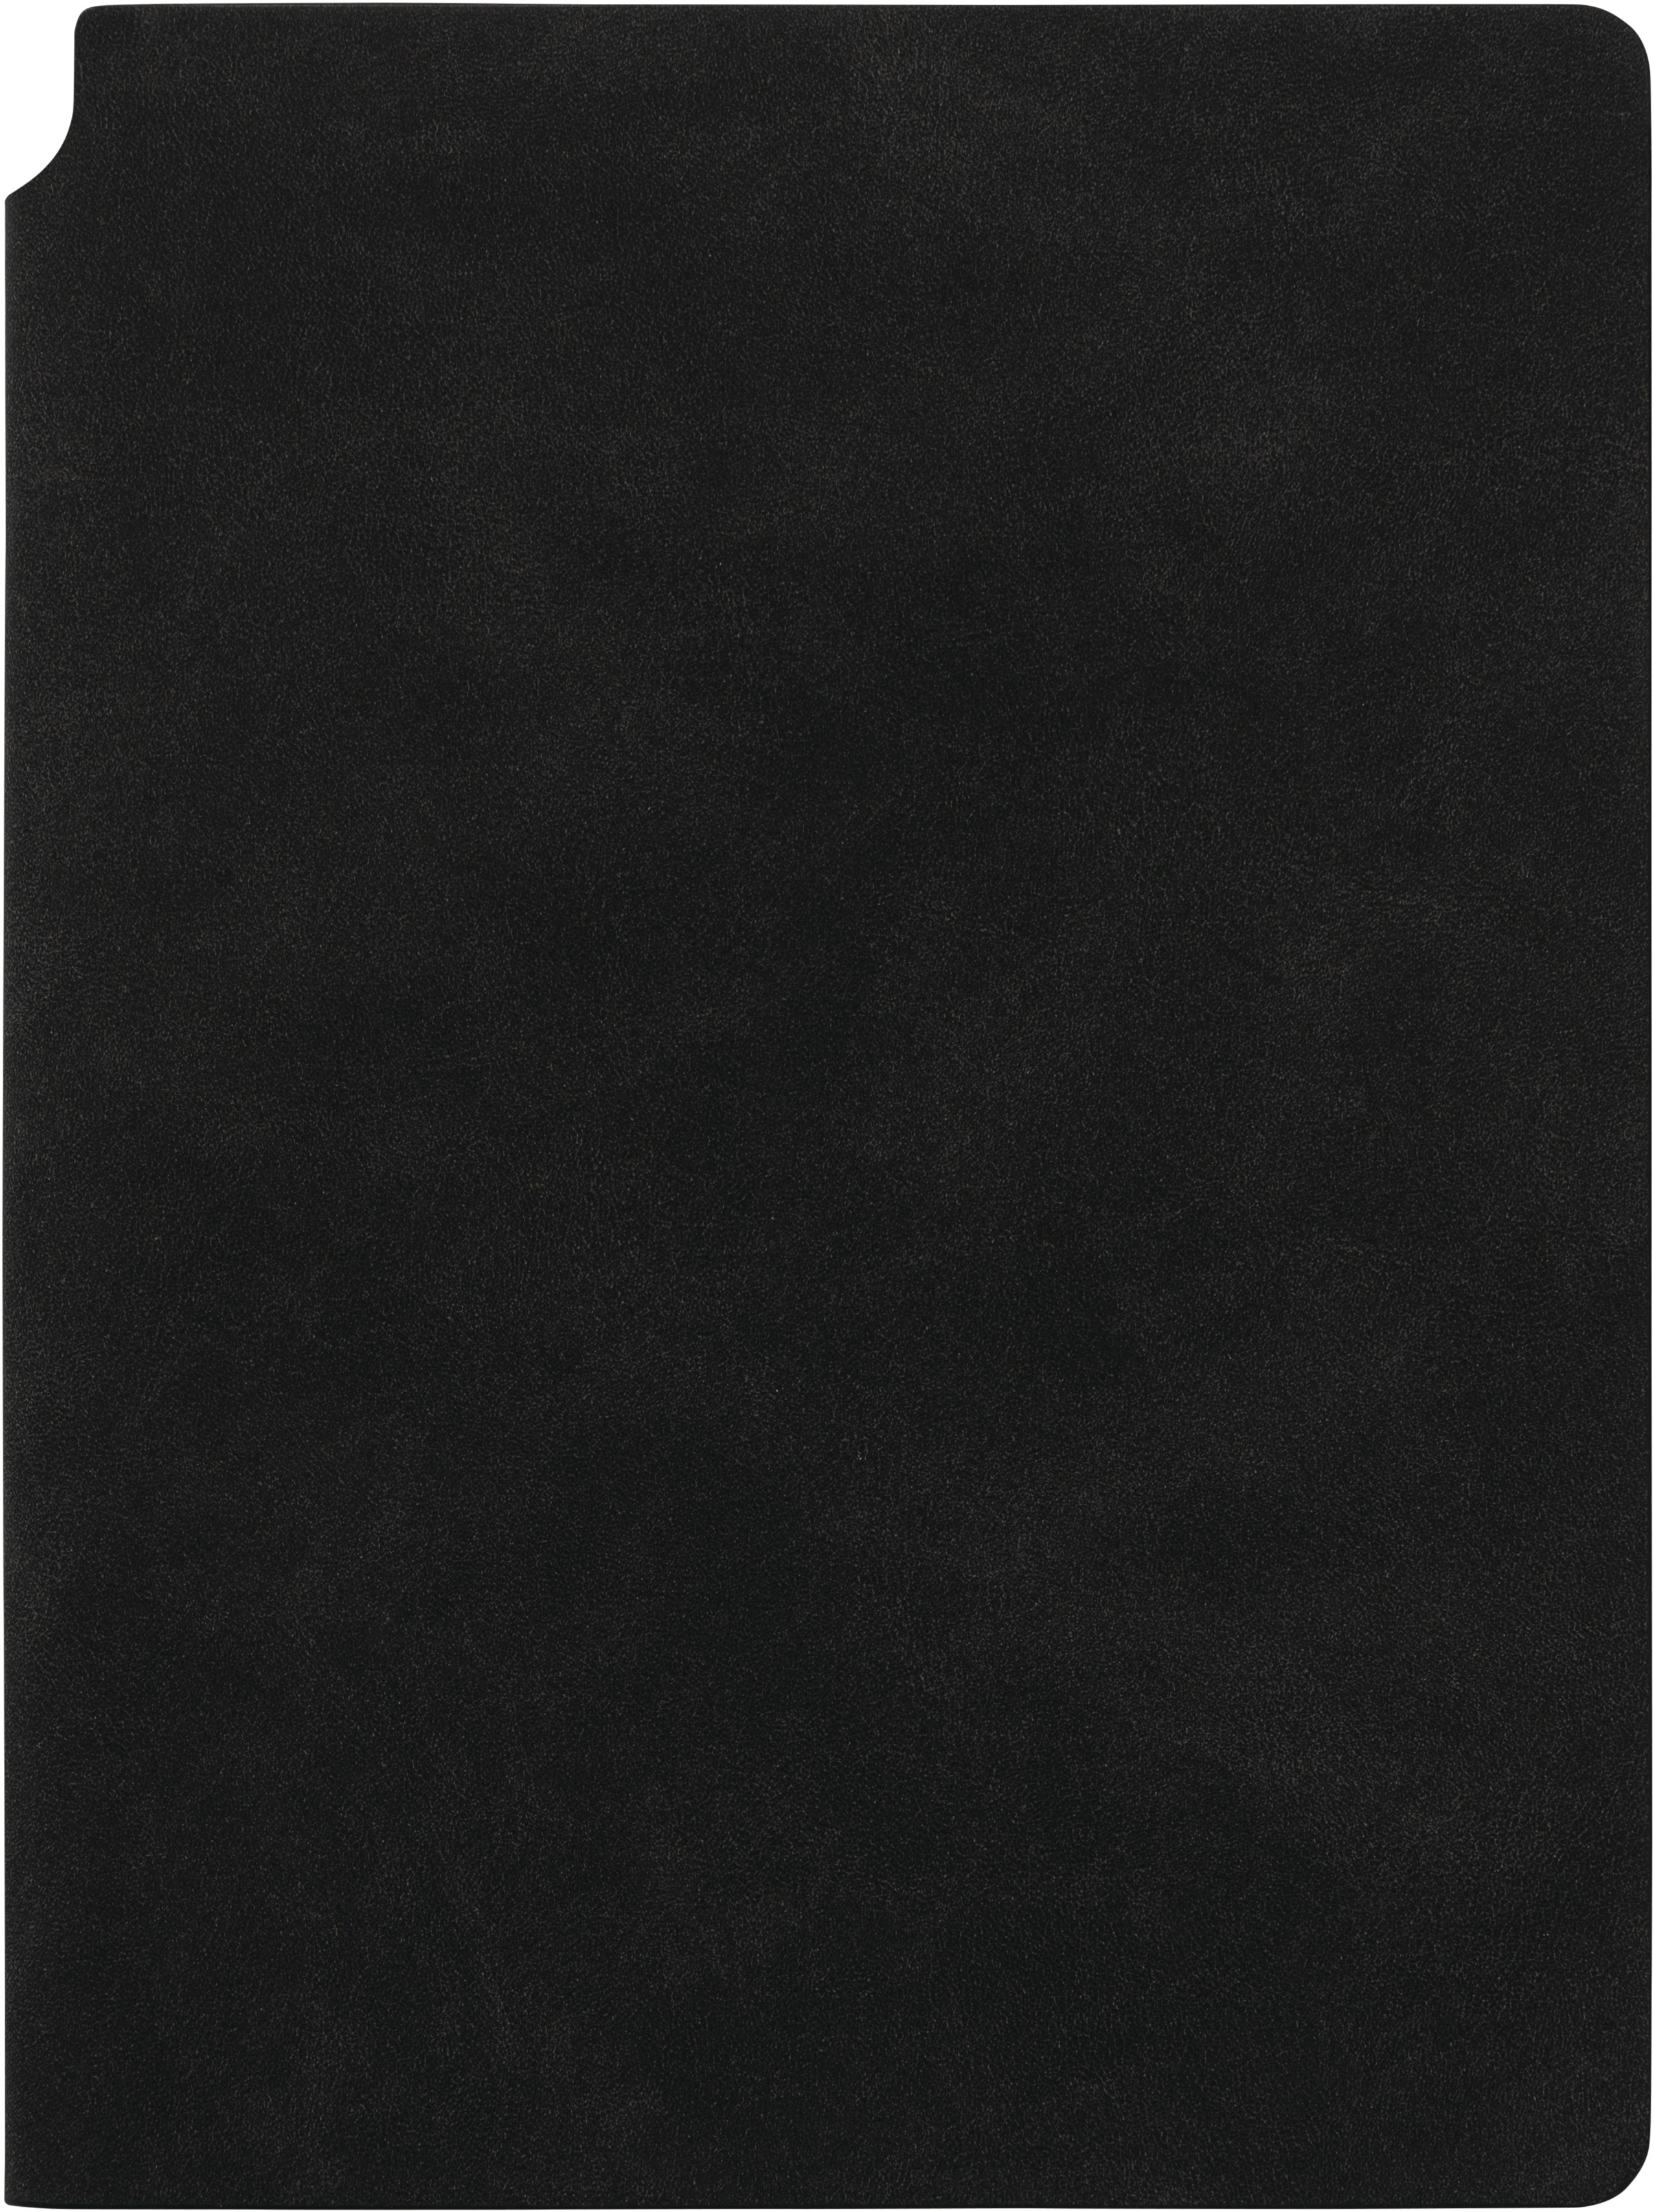 KOLMA Carnet de notes Smooth A5 06.440.06 doted, noir 144 flls. doted, noir 144 flls.